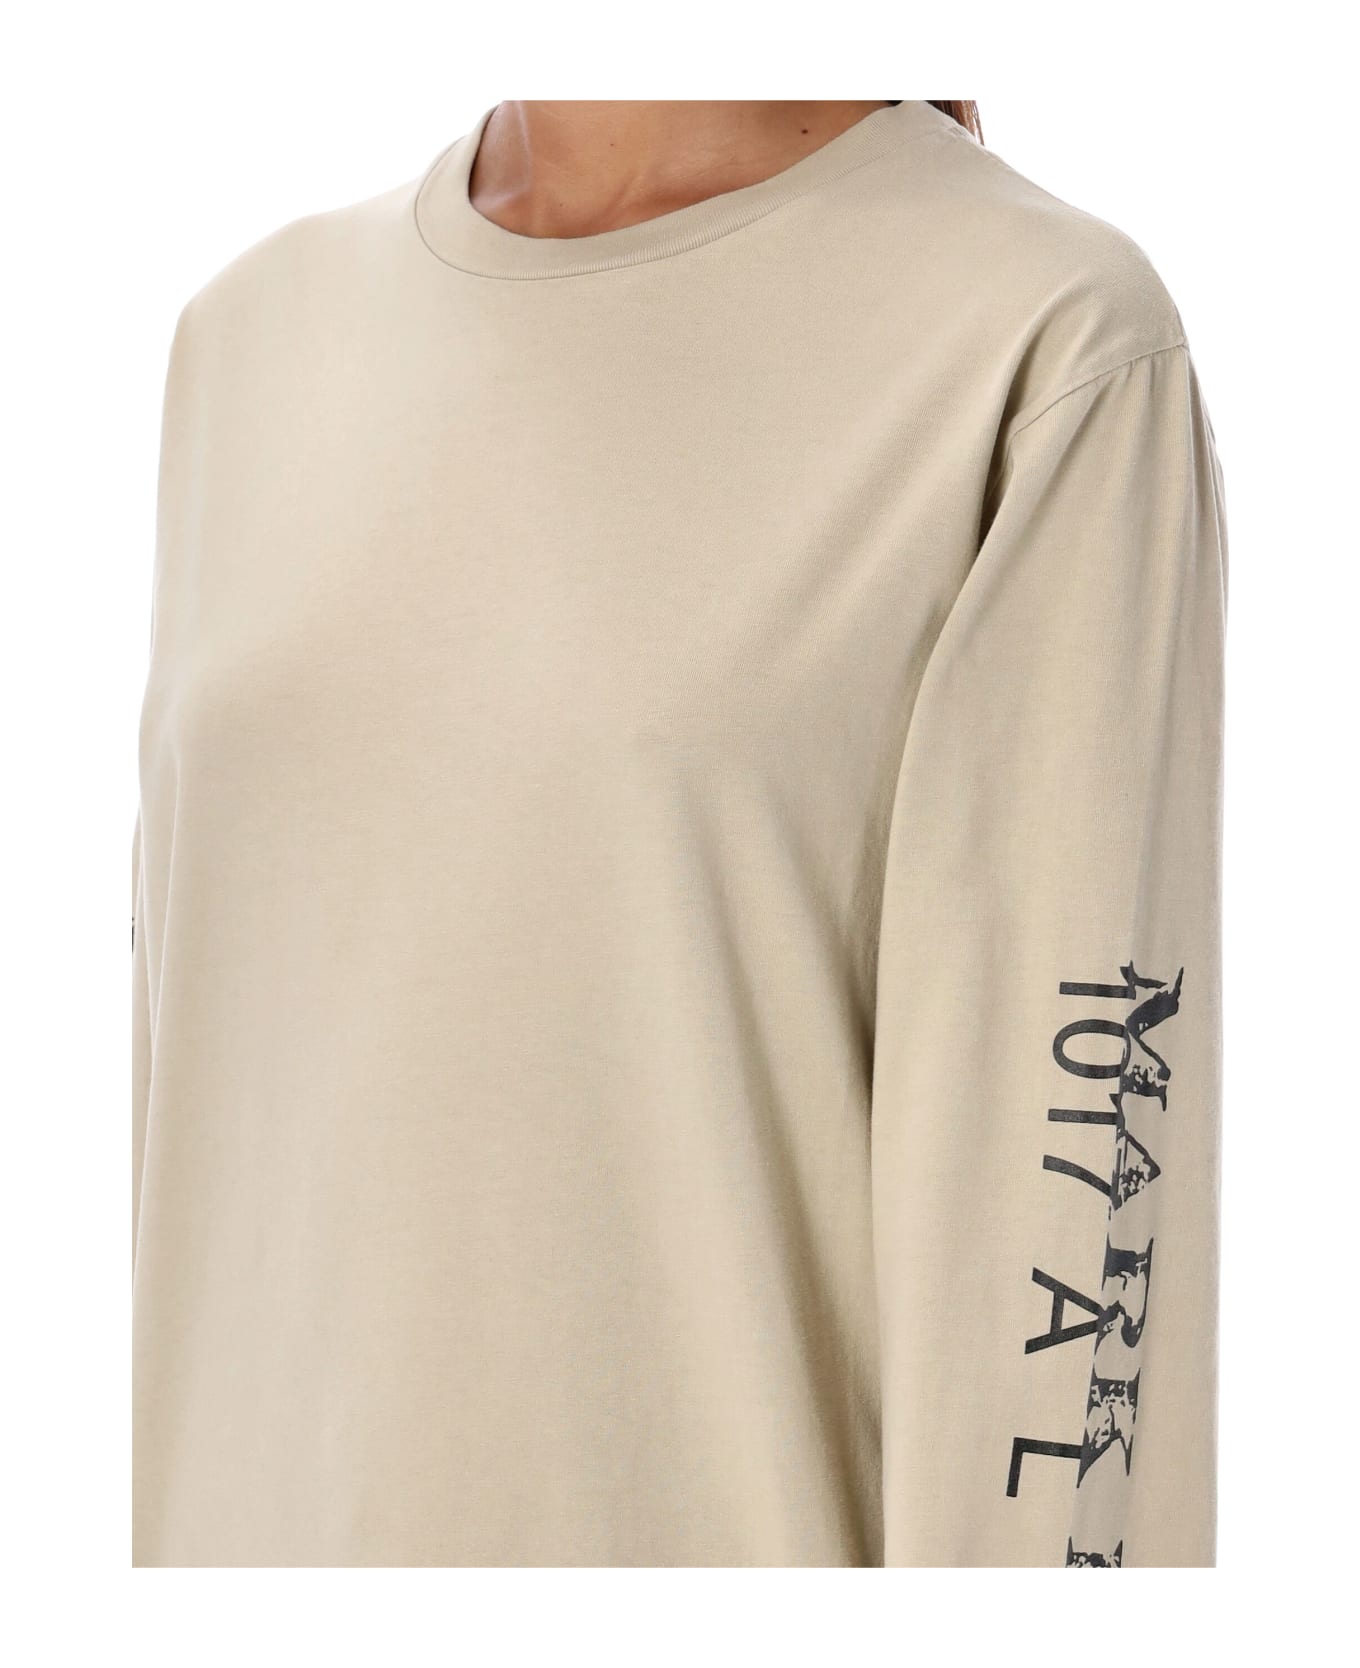 1017 ALYX 9SM Long-sleeved Graphic T-shirt - TAN